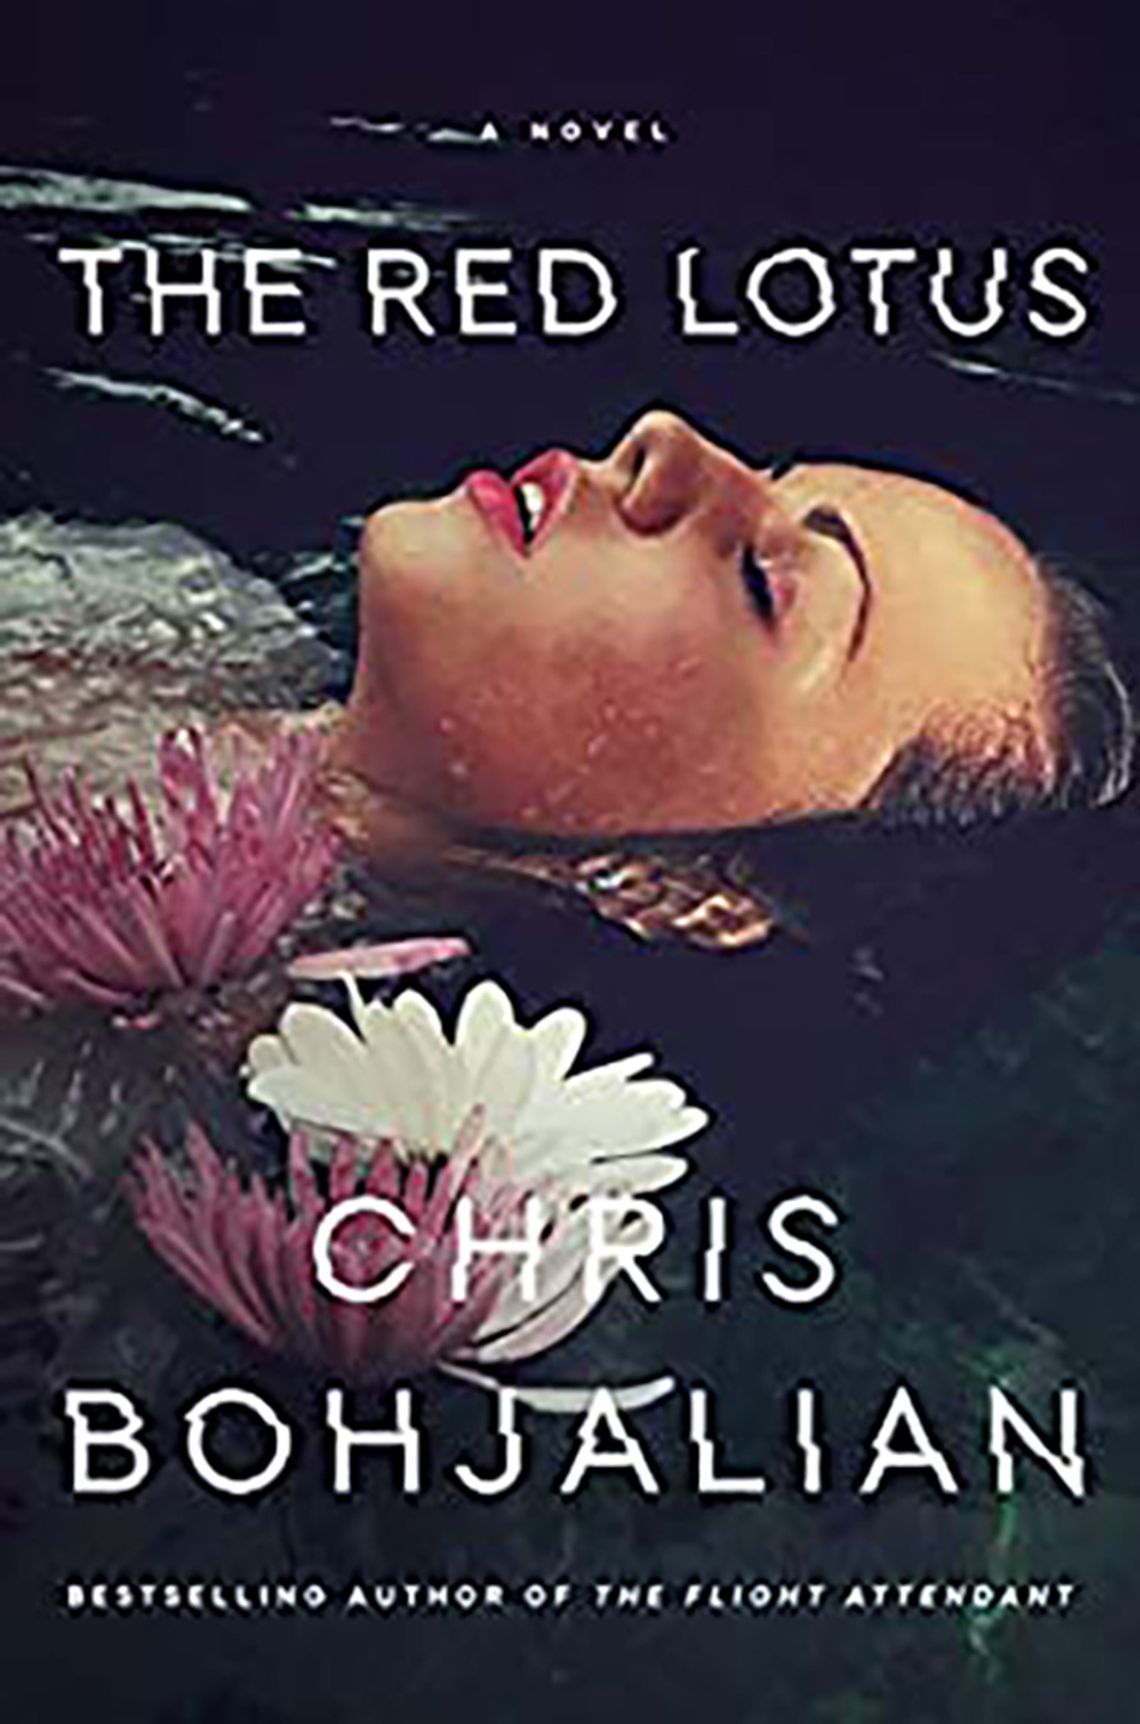 Kelli’s Book Nook - "The Red Lotus" by Chris Bohjalian